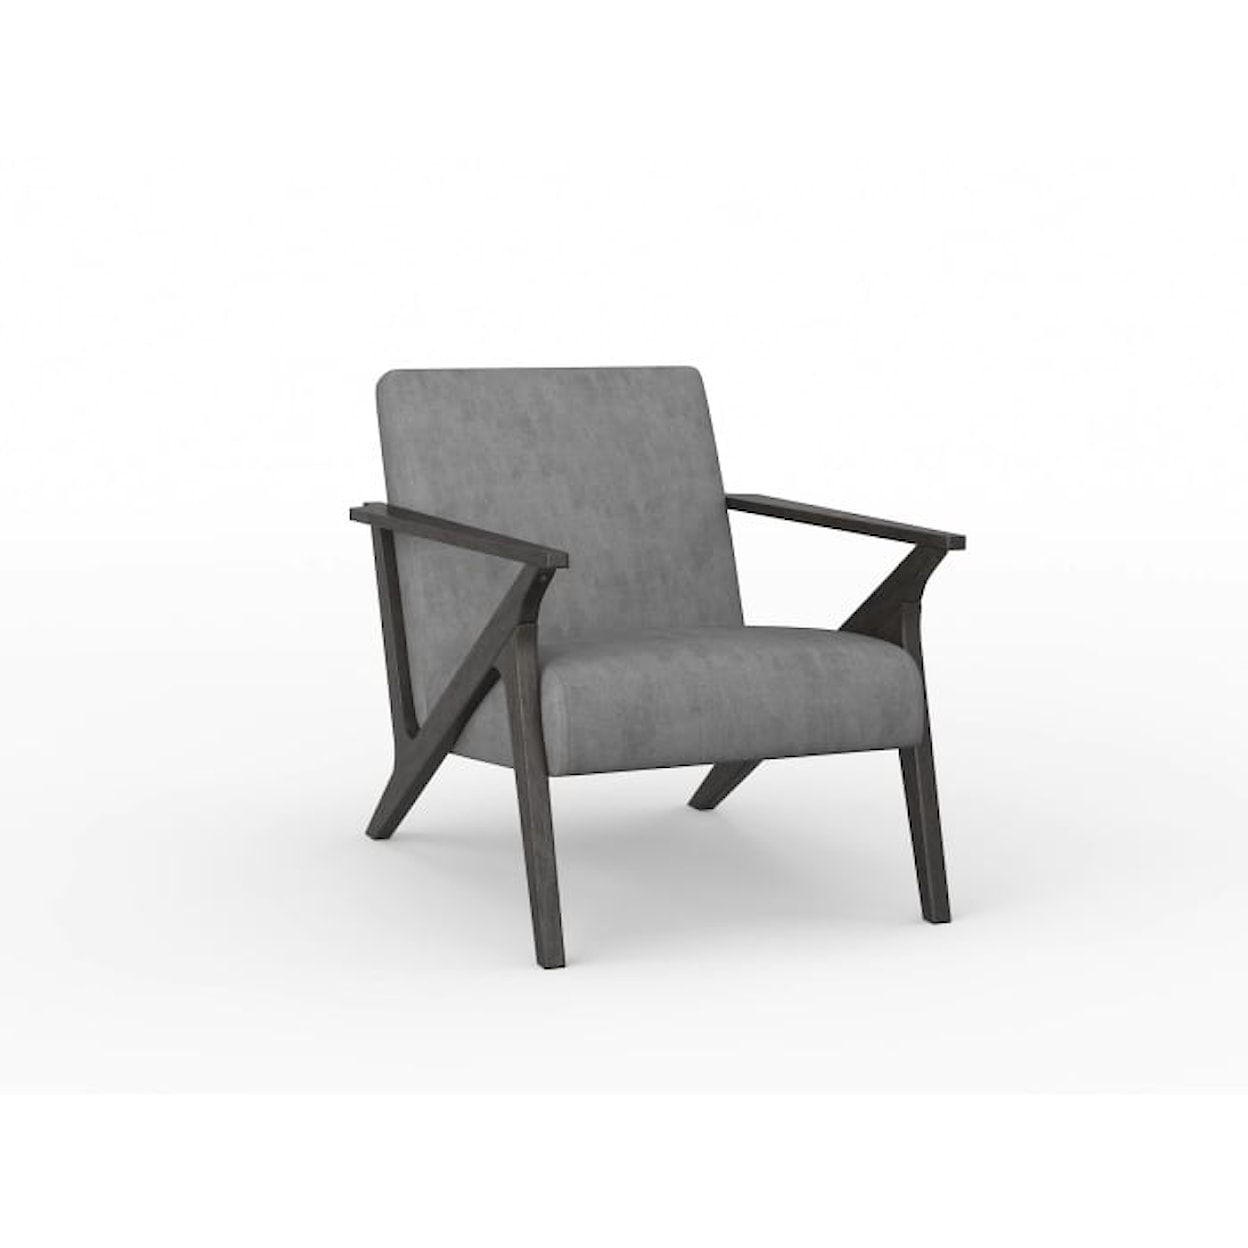 Homelegance Furniture Coriana Accent Chair